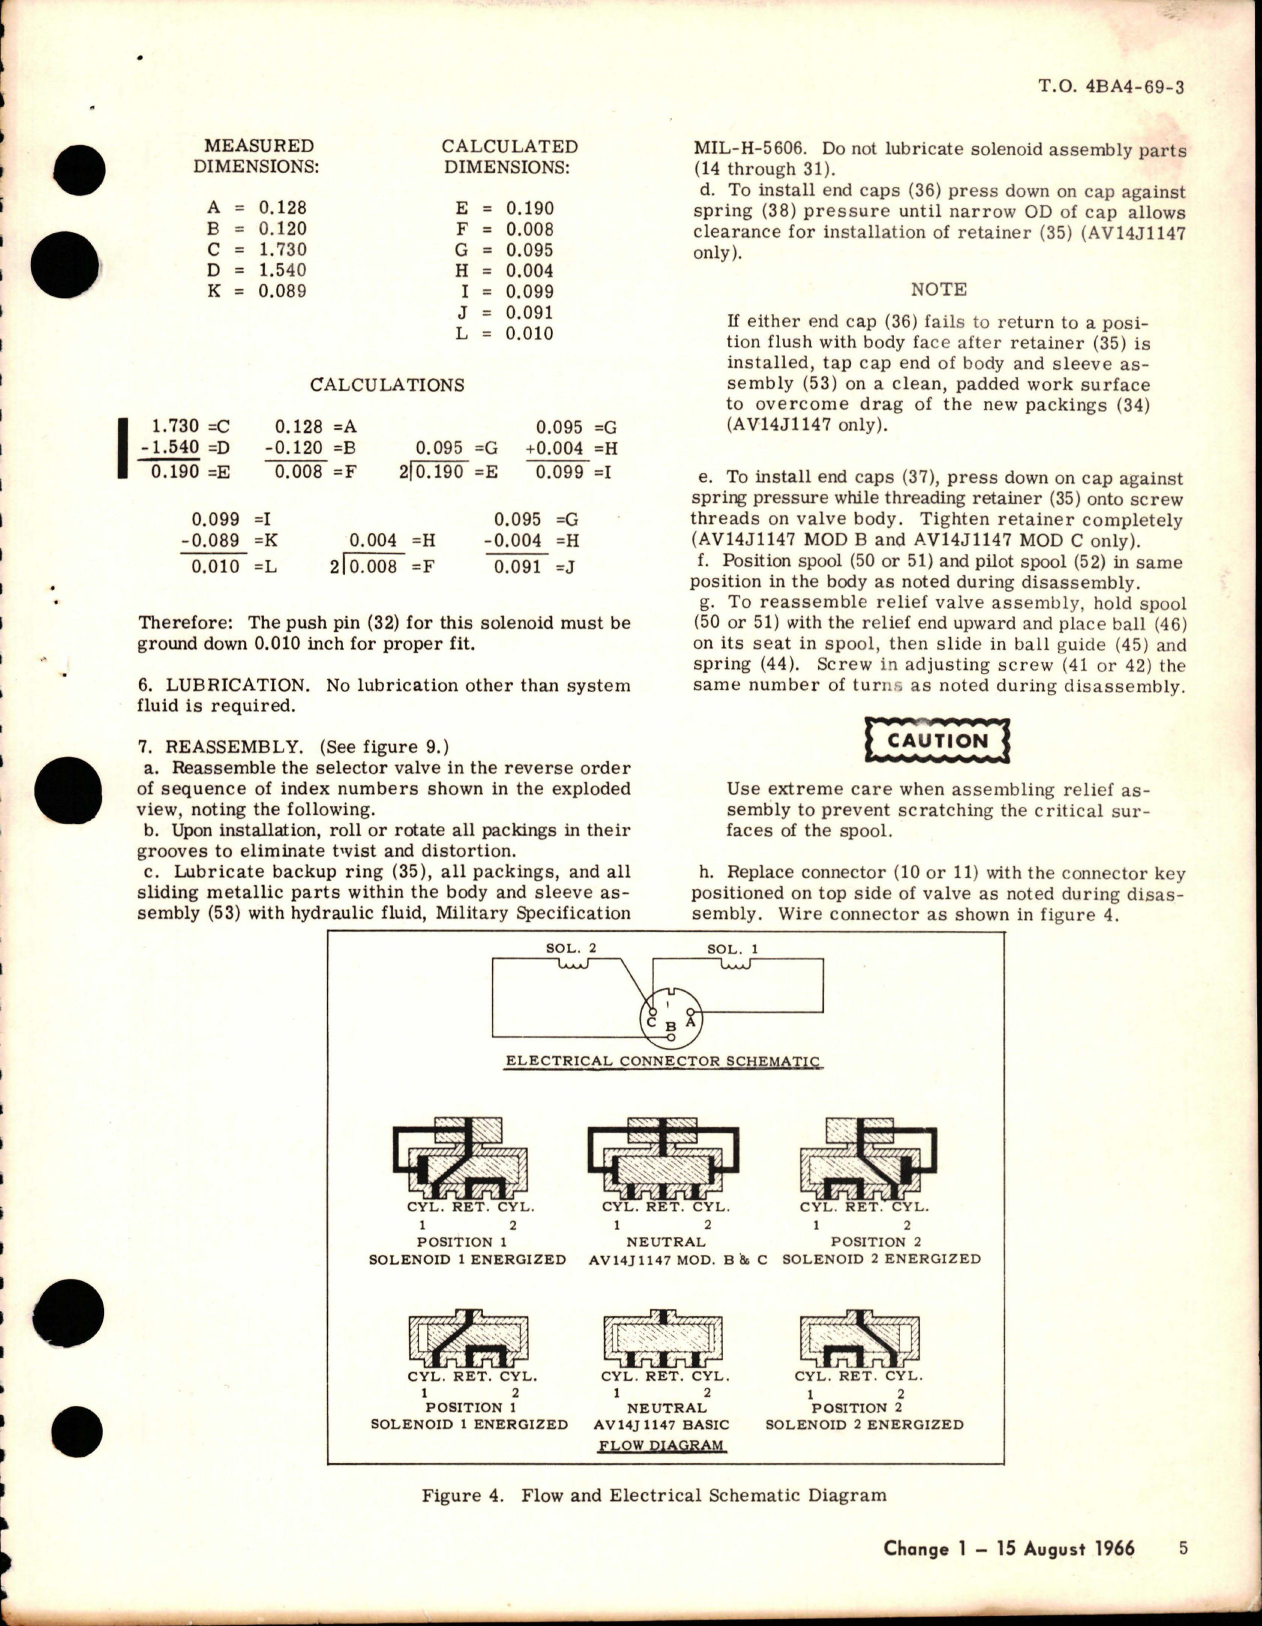 Sample page 7 from AirCorps Library document: Overhaul with Parts Breakdown for Pilot Operated 4-Way, 3-Position Selector Valve - Parts AV14J1147, AV14J1147 - B, AV14J1147 - C